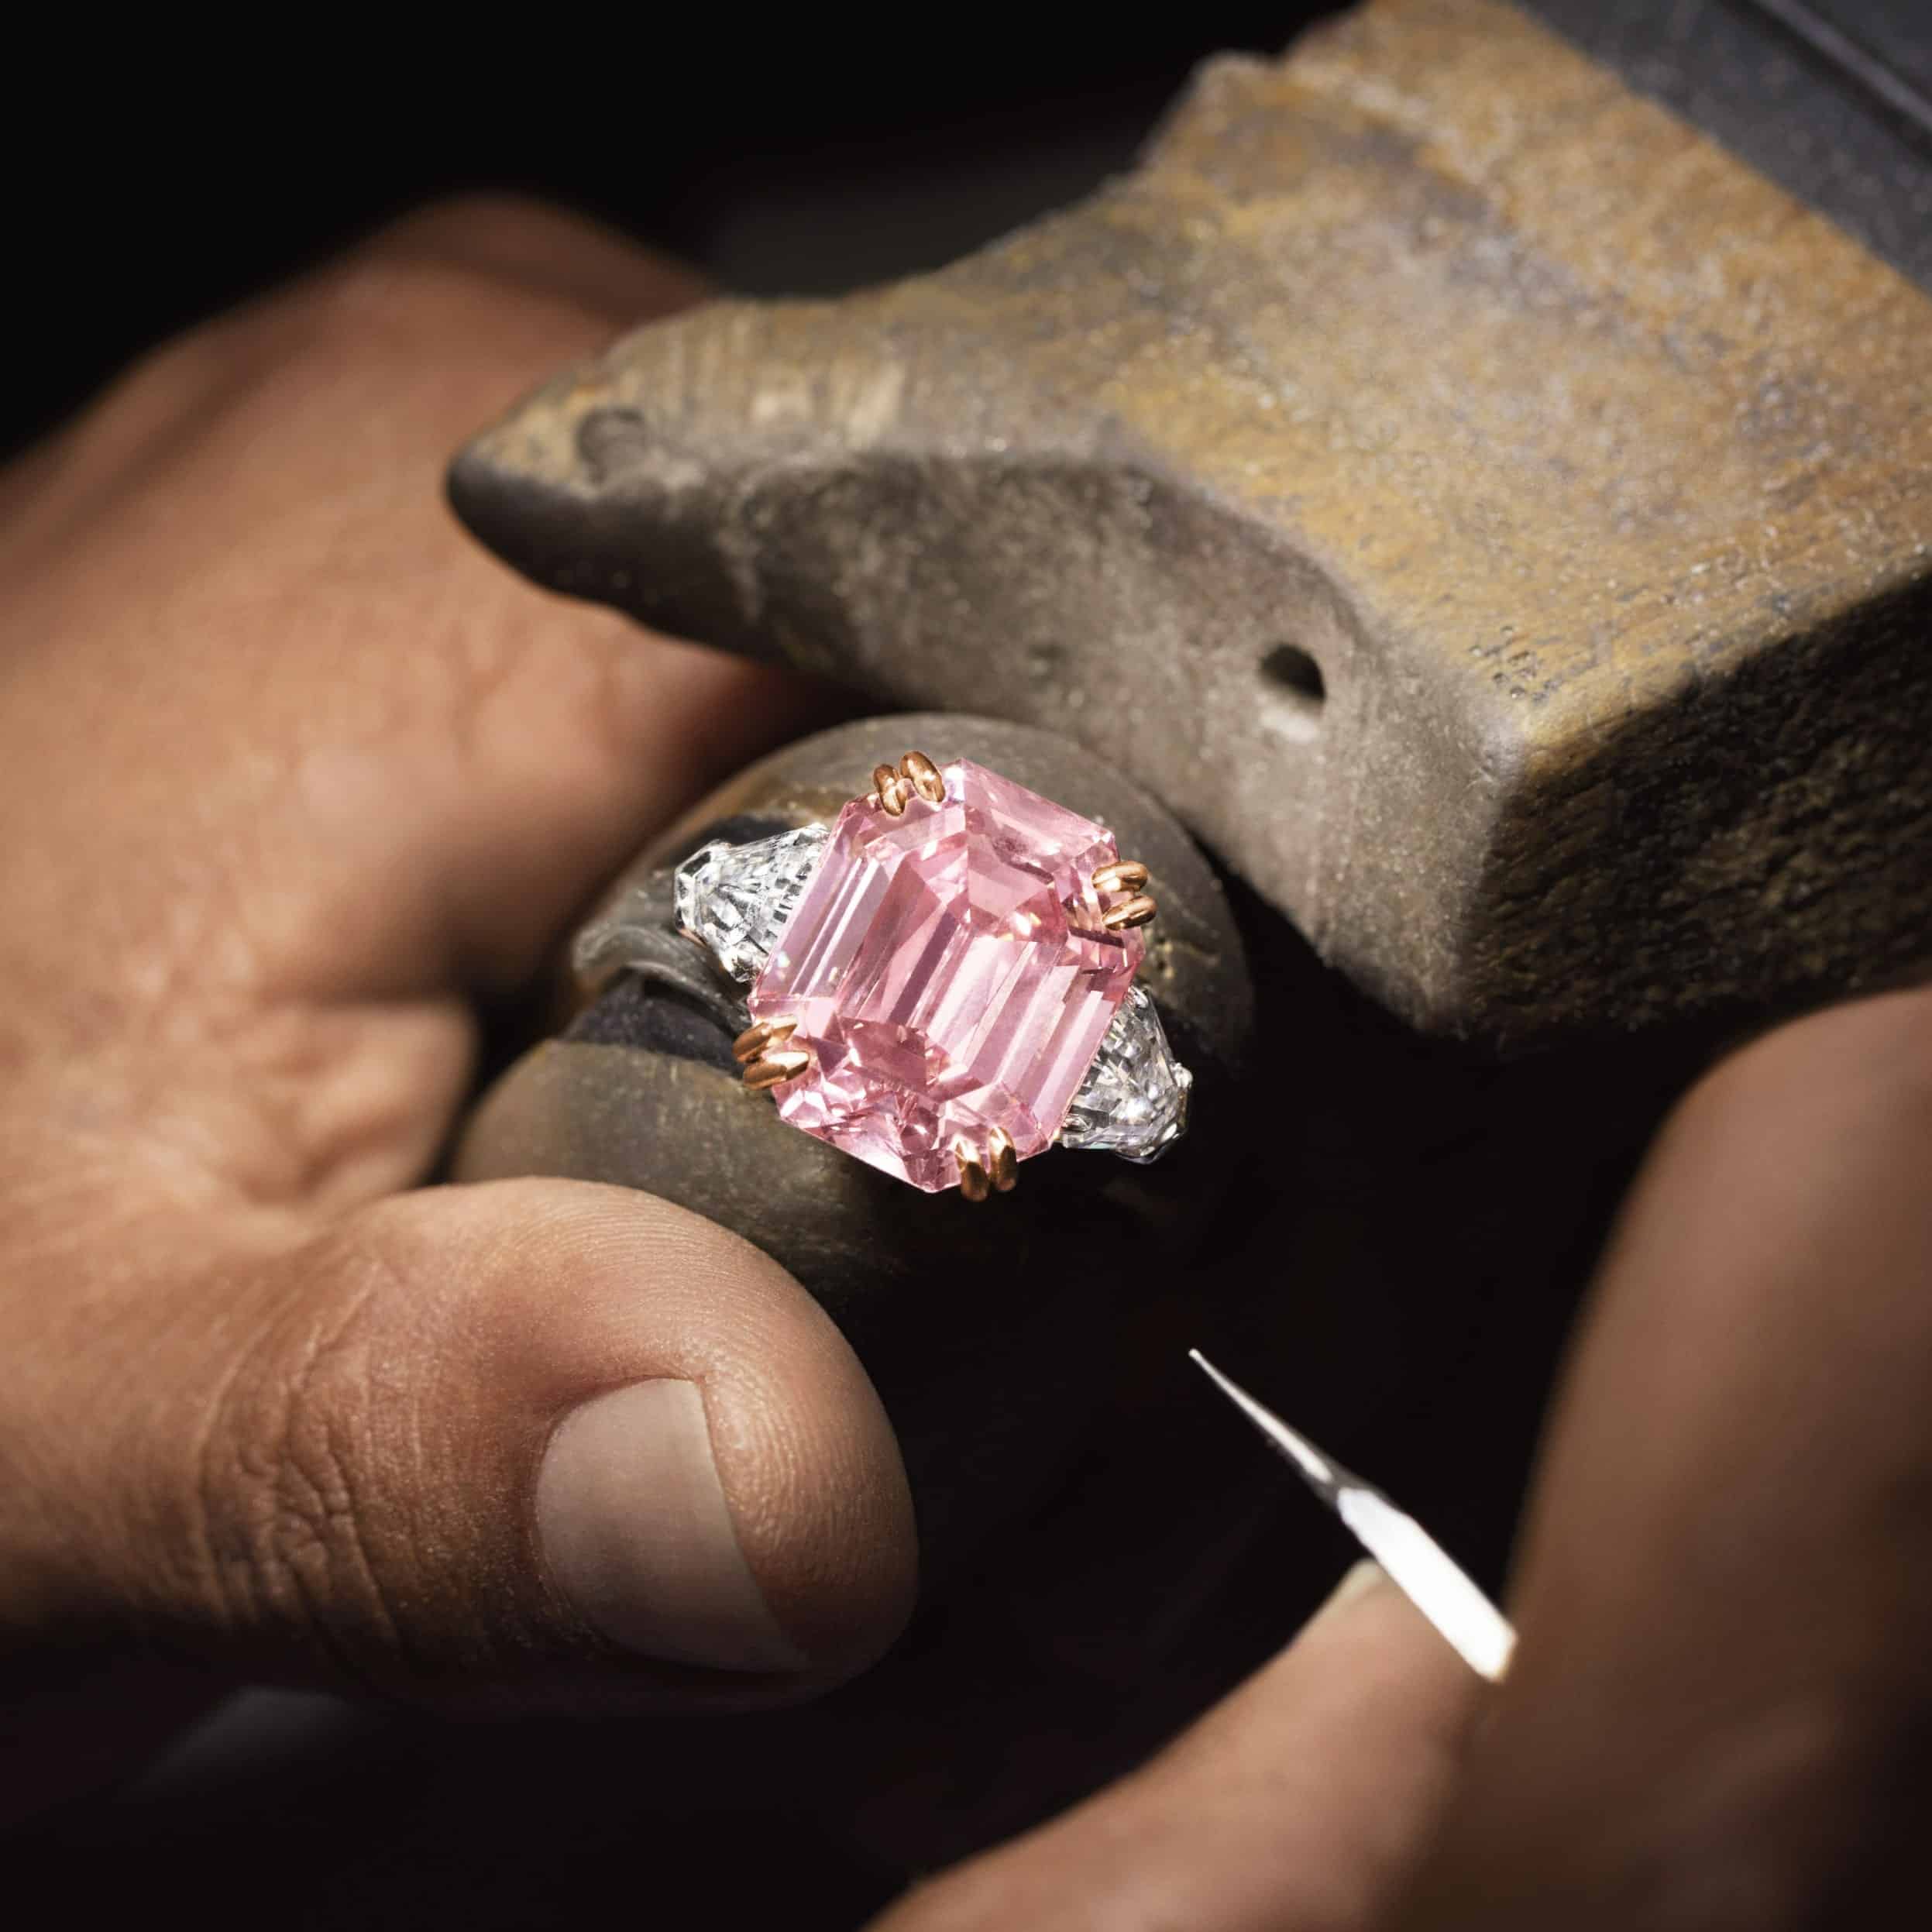 The Pink Legacy Diamond